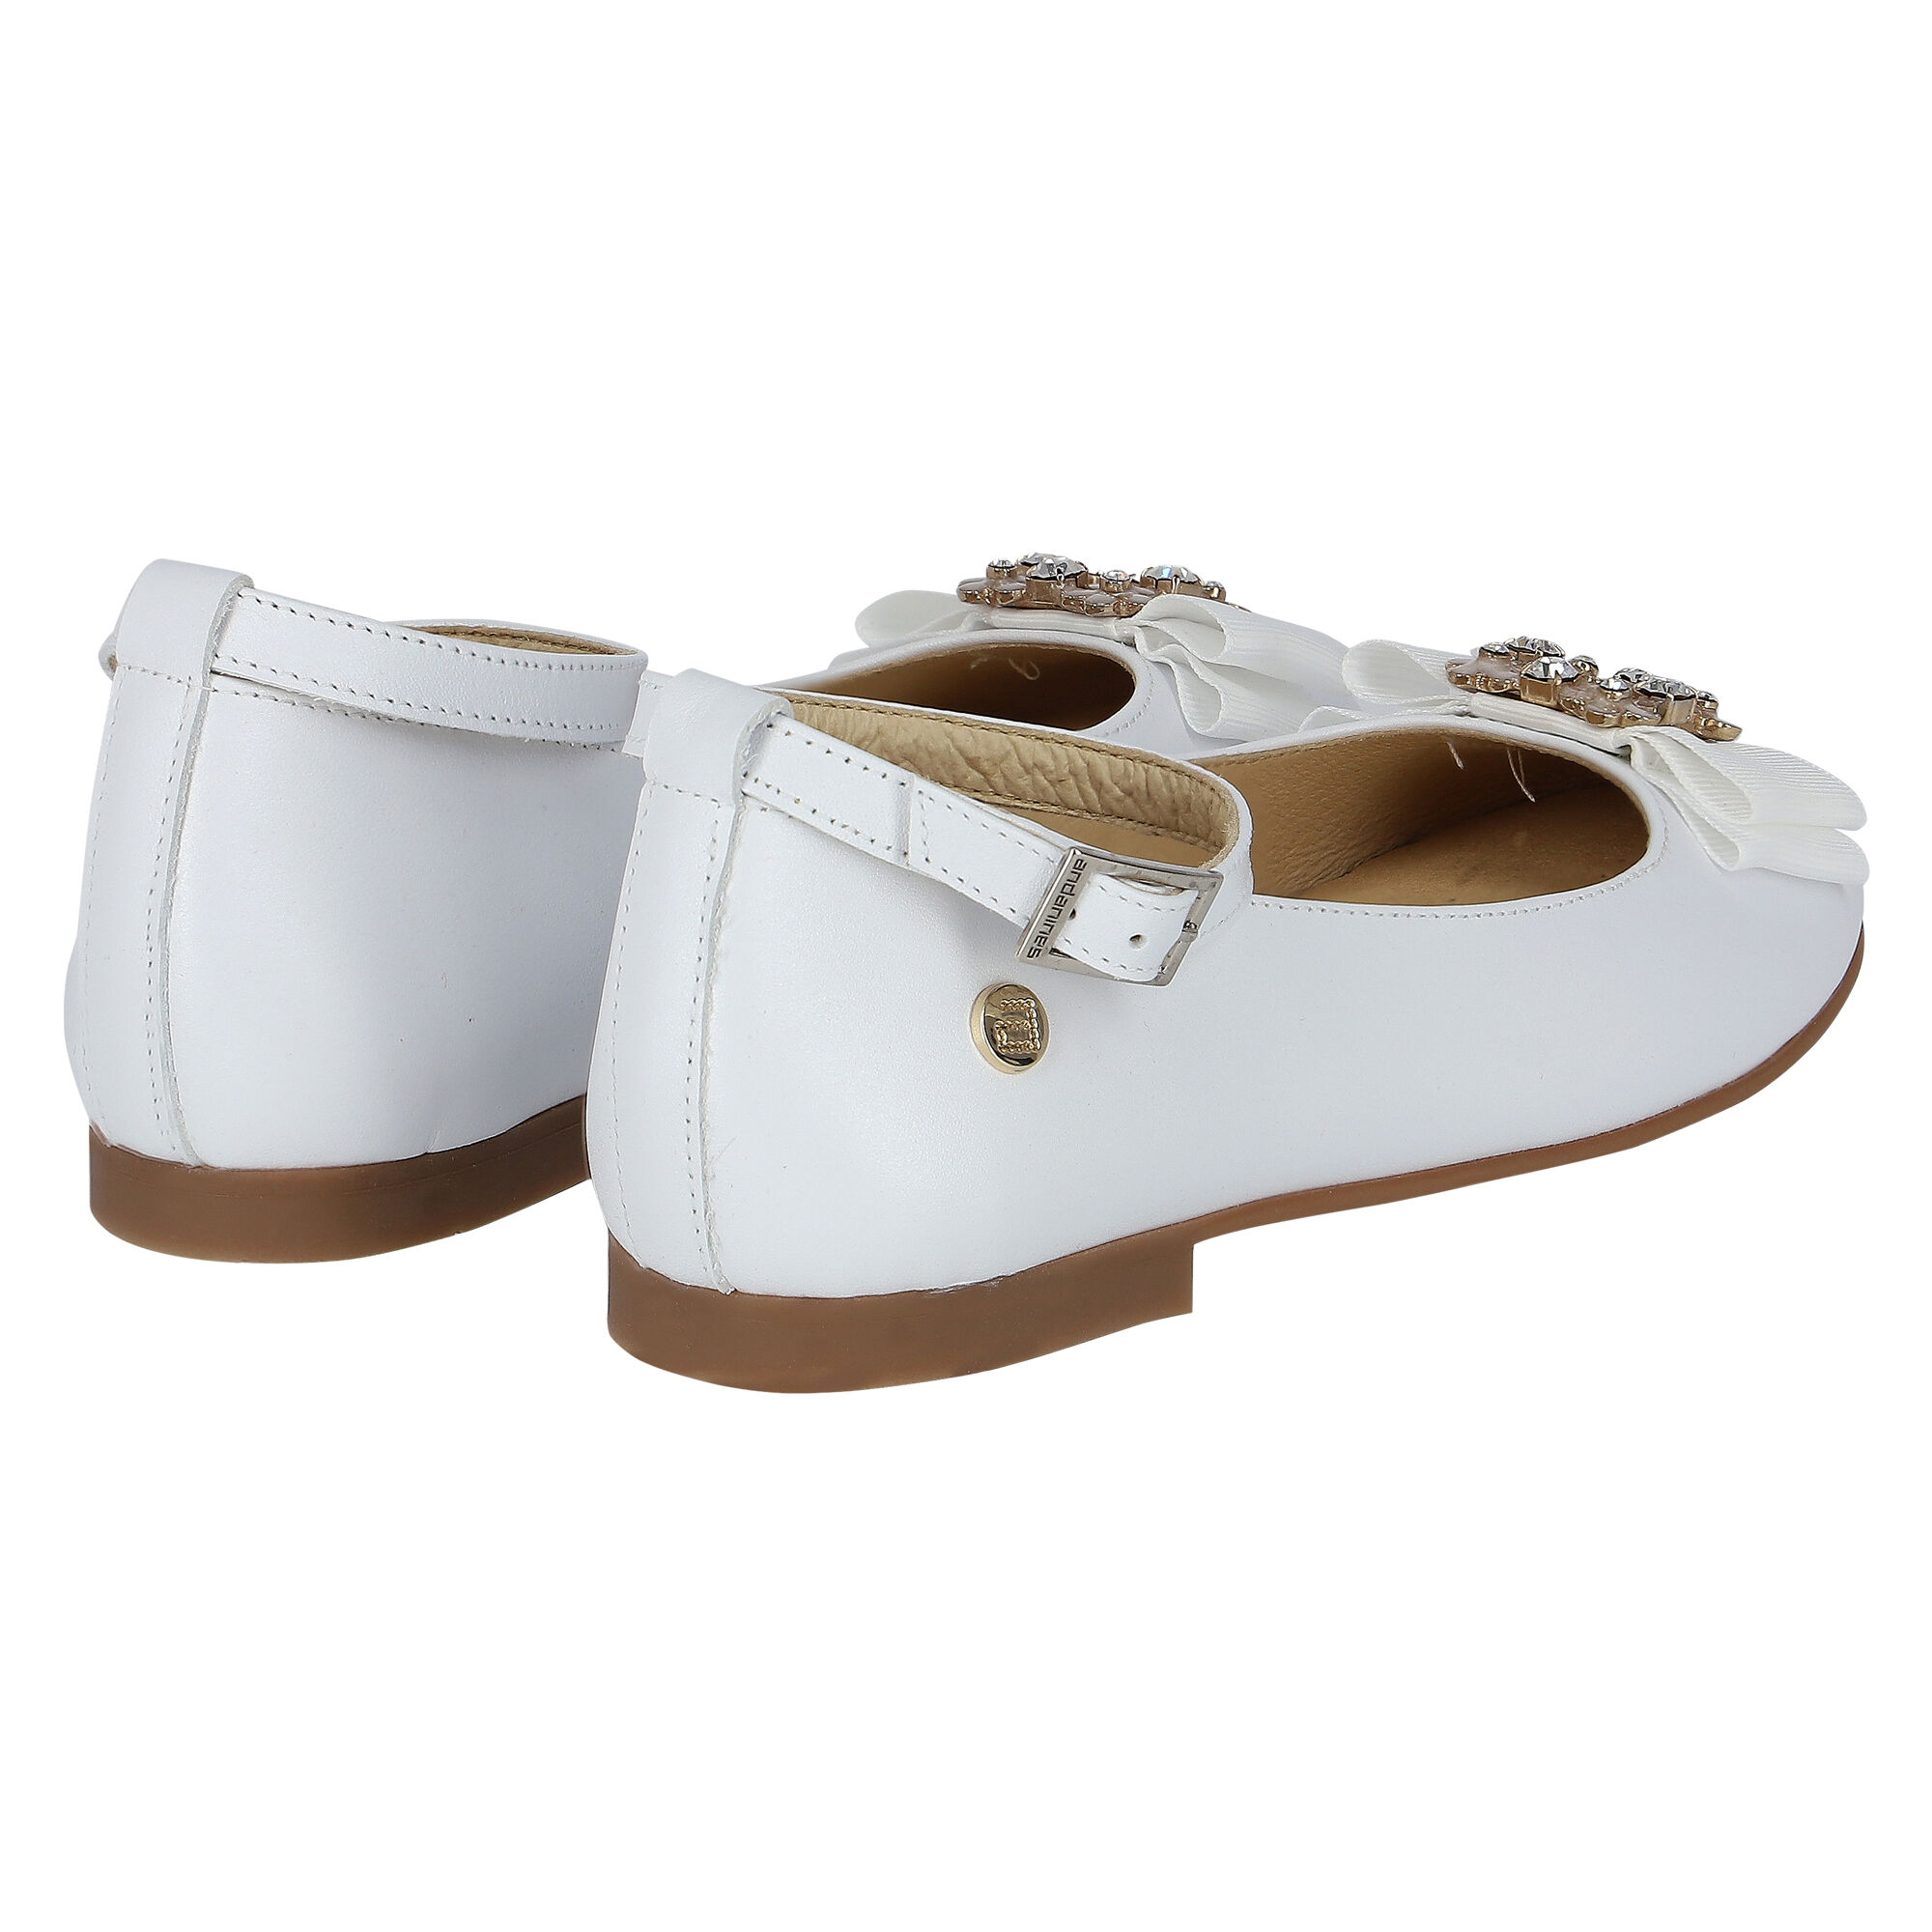 ANDANINES floral-appliqué leather ballerina shoes - White